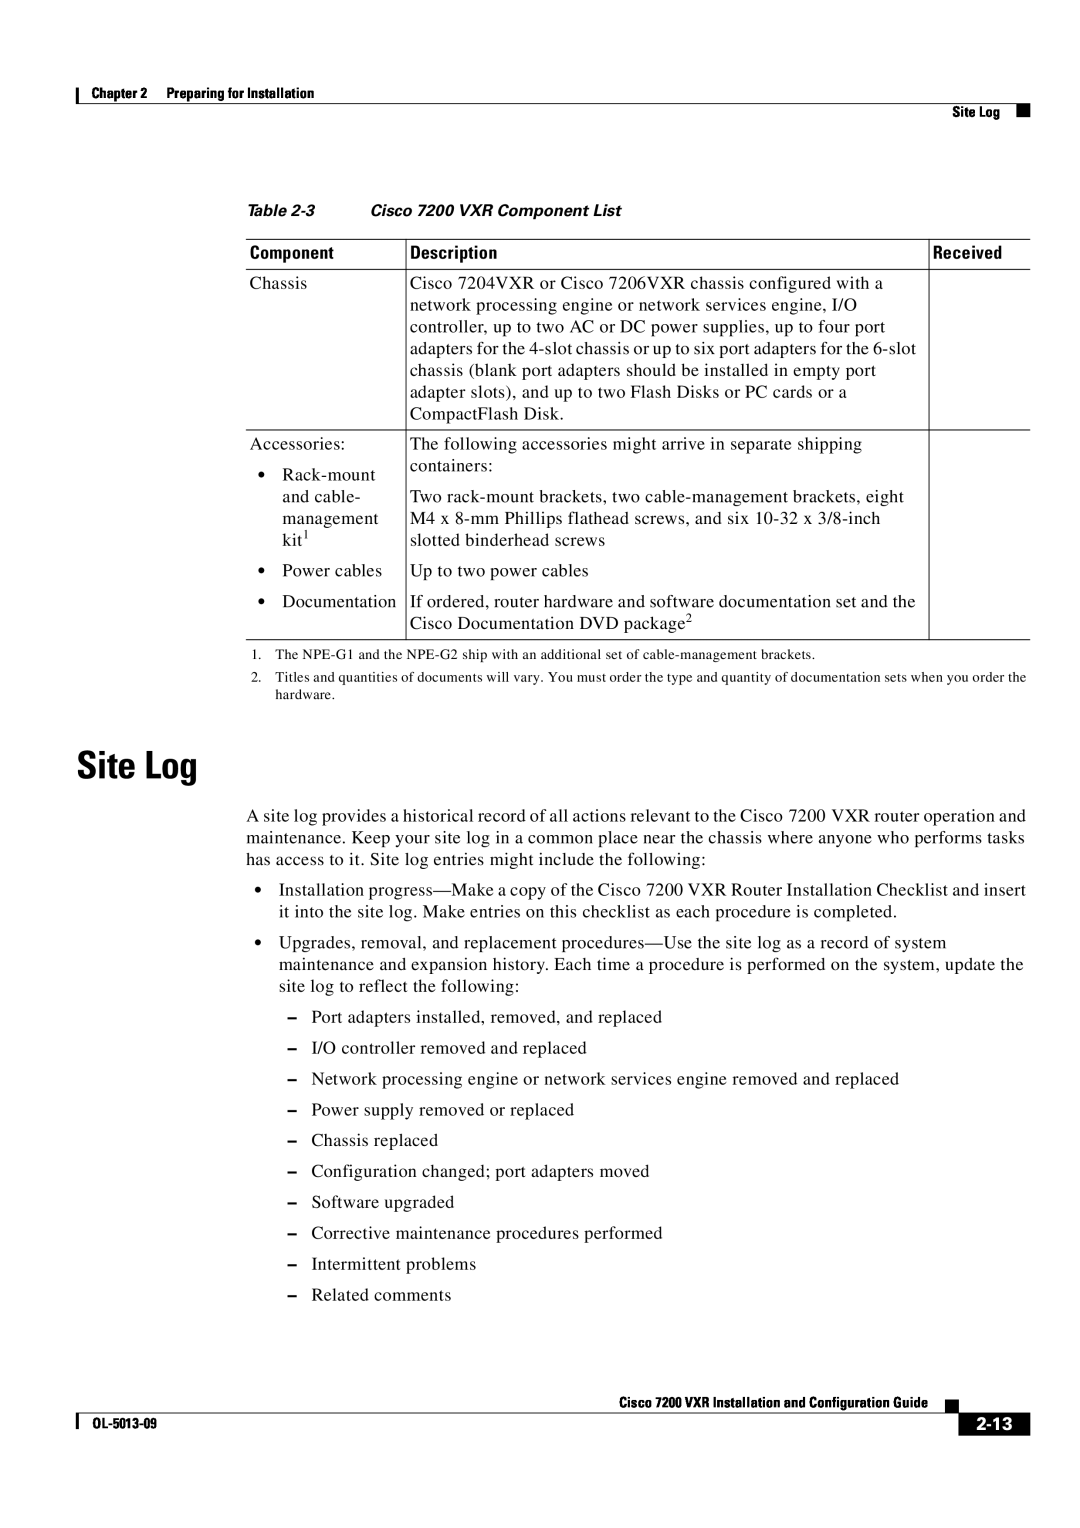 Cisco Systems 7200 VXR manual Site Log, 2-13 